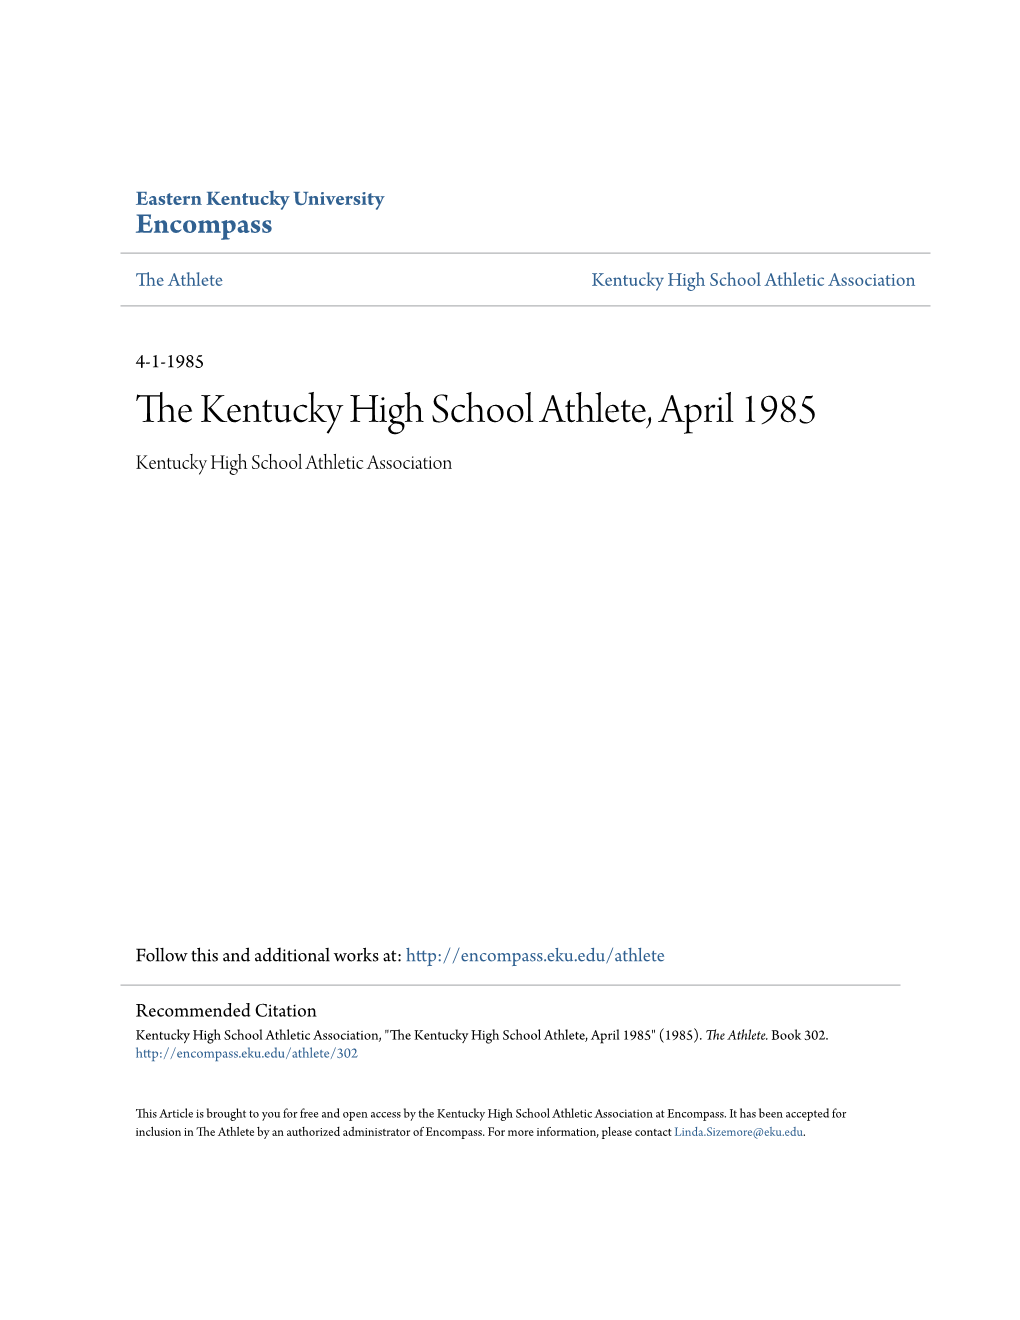 The Kentucky High School Athlete, April 1985 Kentucky High School Athletic Association